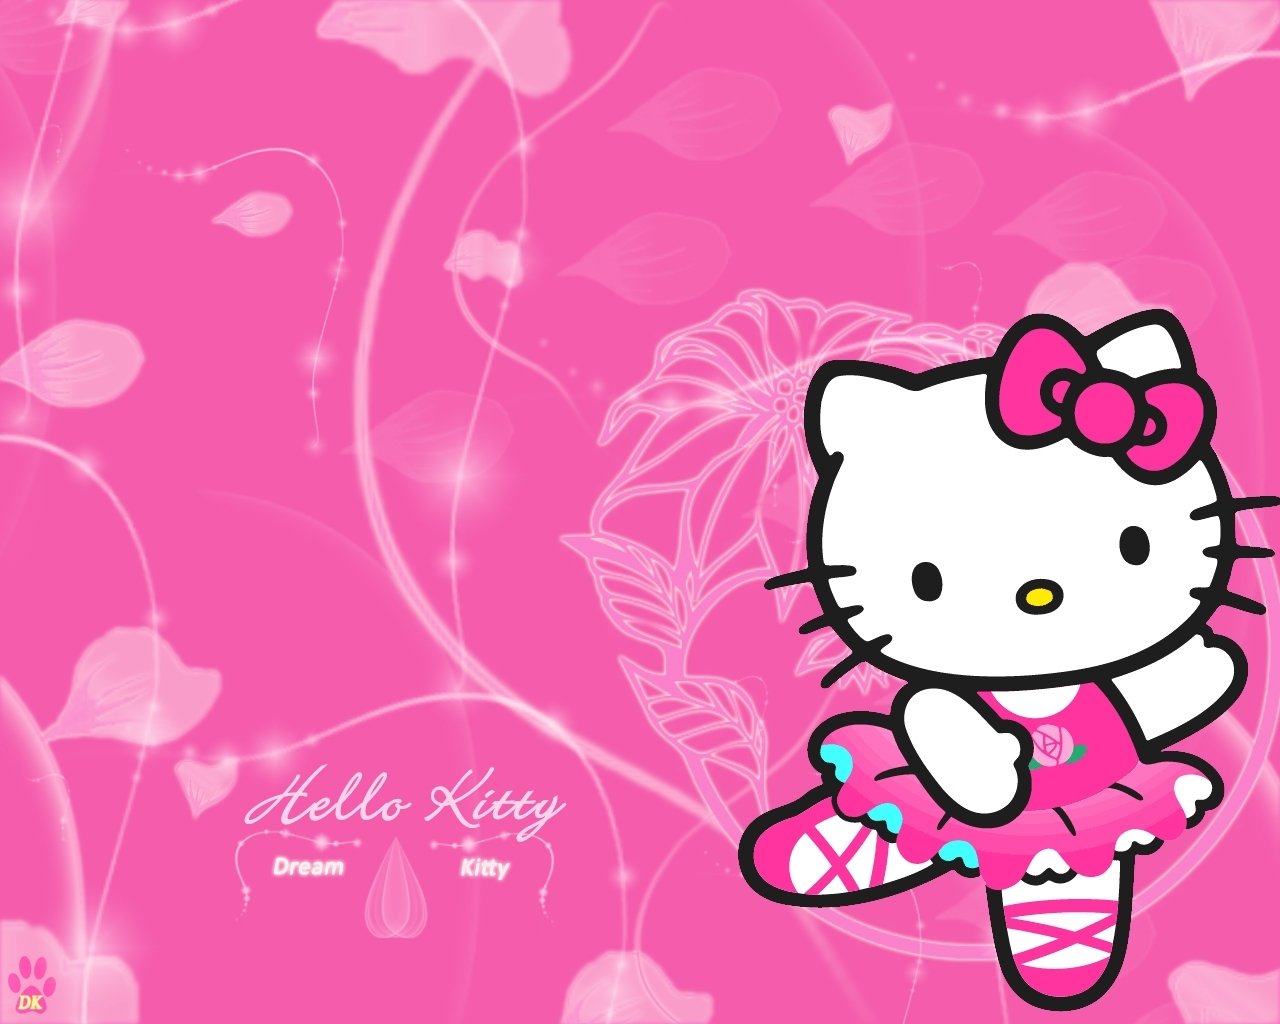 41+] Hello Kitty Pictures Background - WallpaperSafari